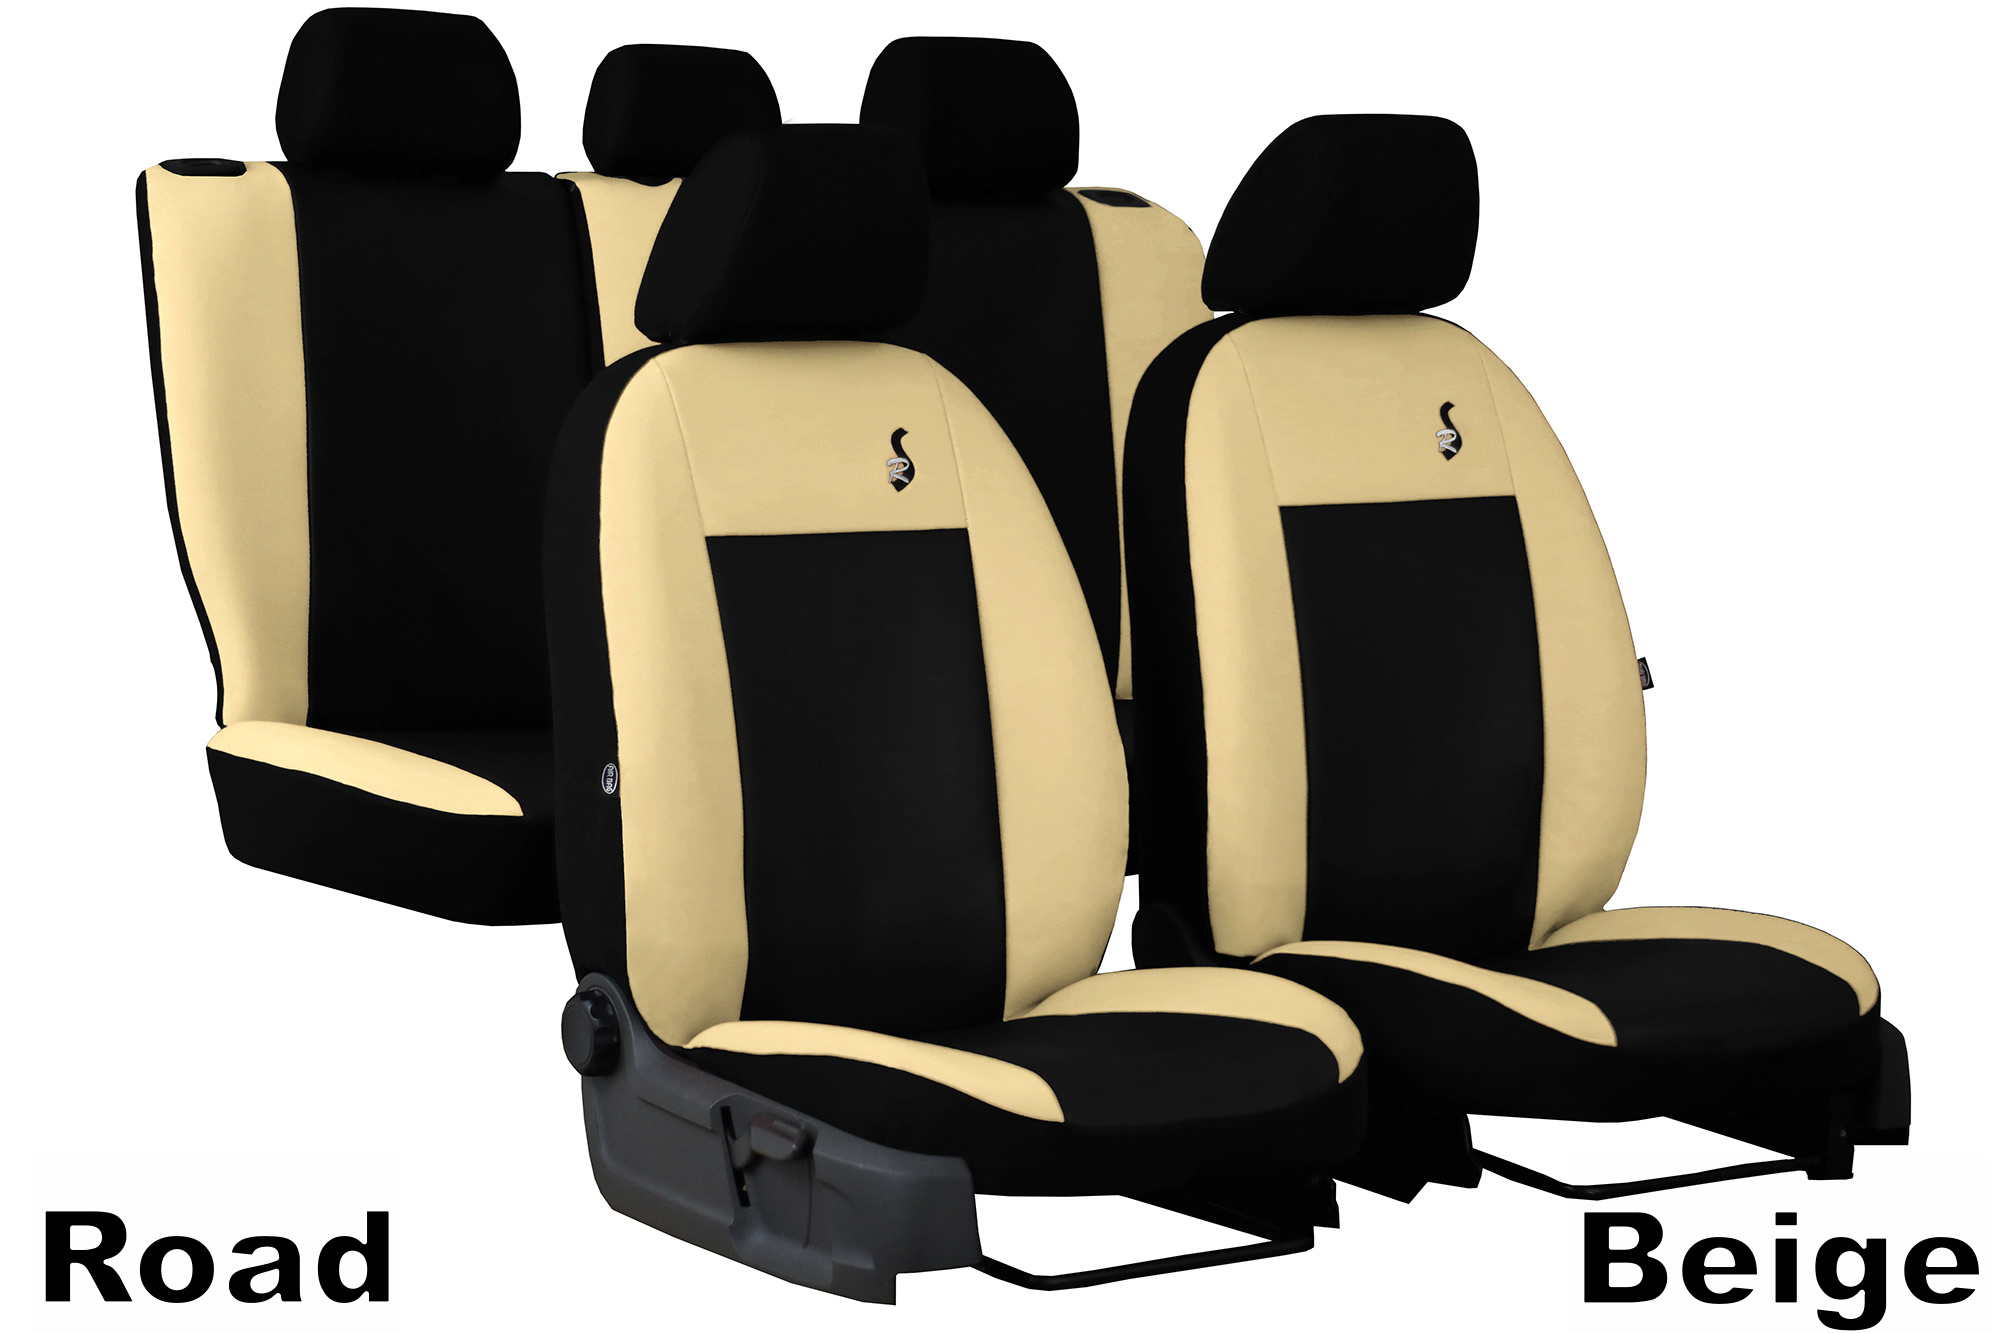 Autositzbezüge Maß Schonbezüge Sitzbezug für Volkswagen Tiguan II Comfort  (16- )